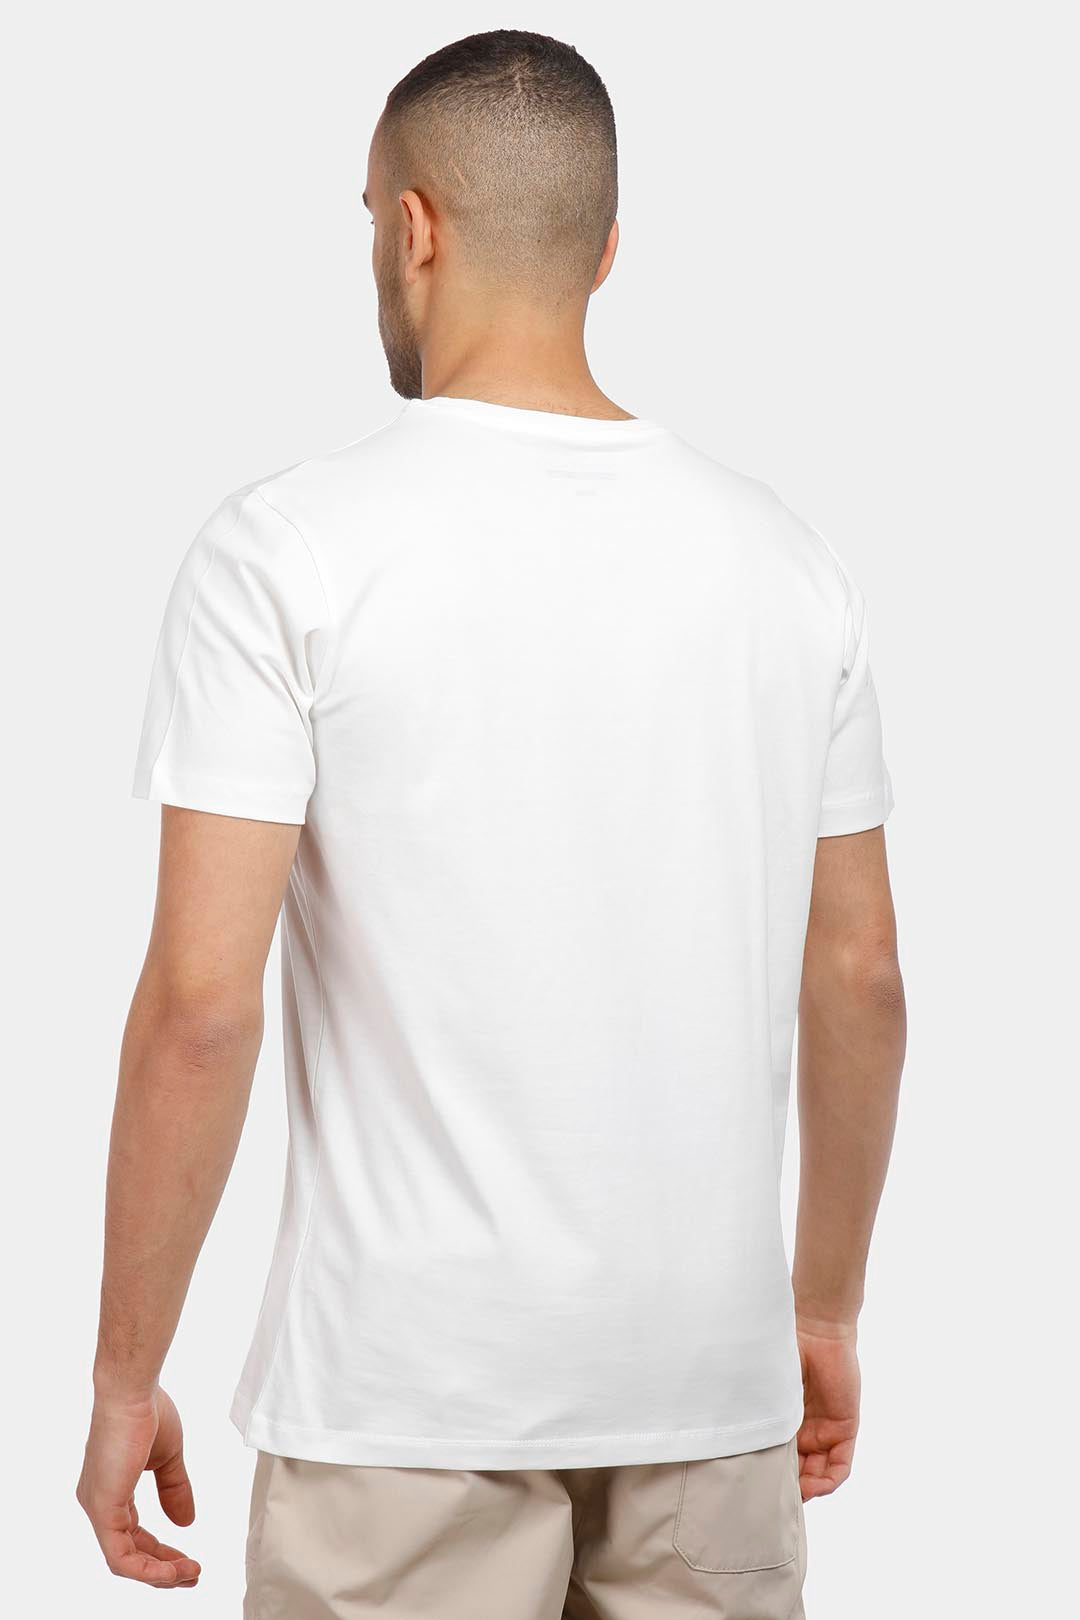 White-t-shirt-men-back-printed